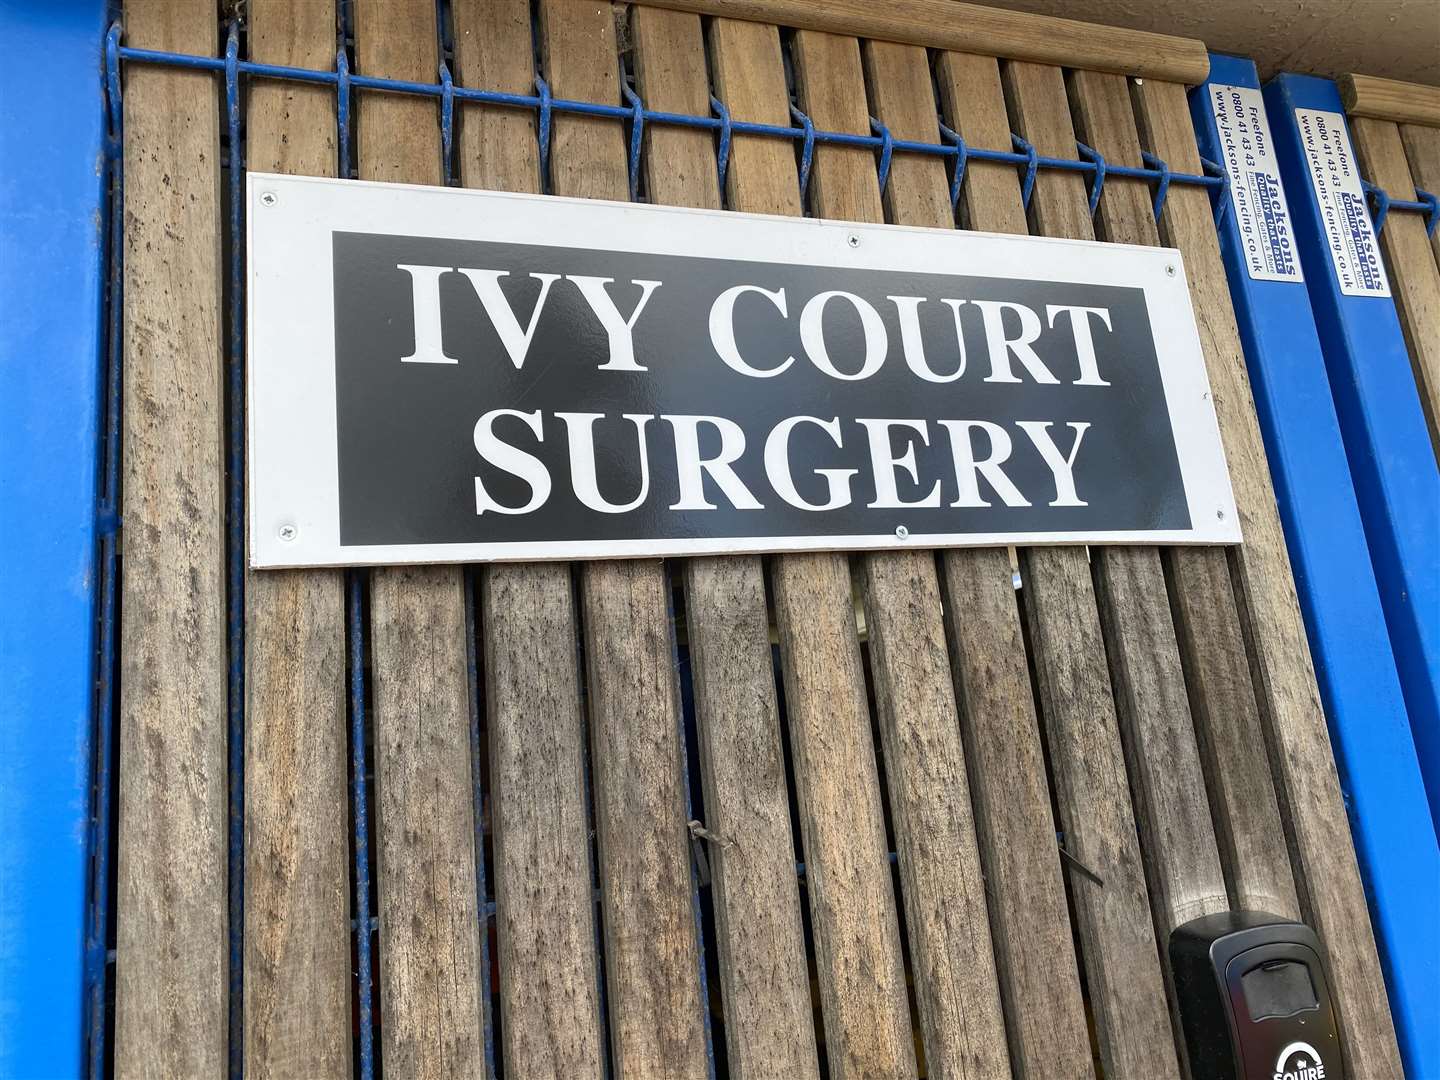 Ivy Court Surgery in Tenterden has put in strict measures to control coronavirus